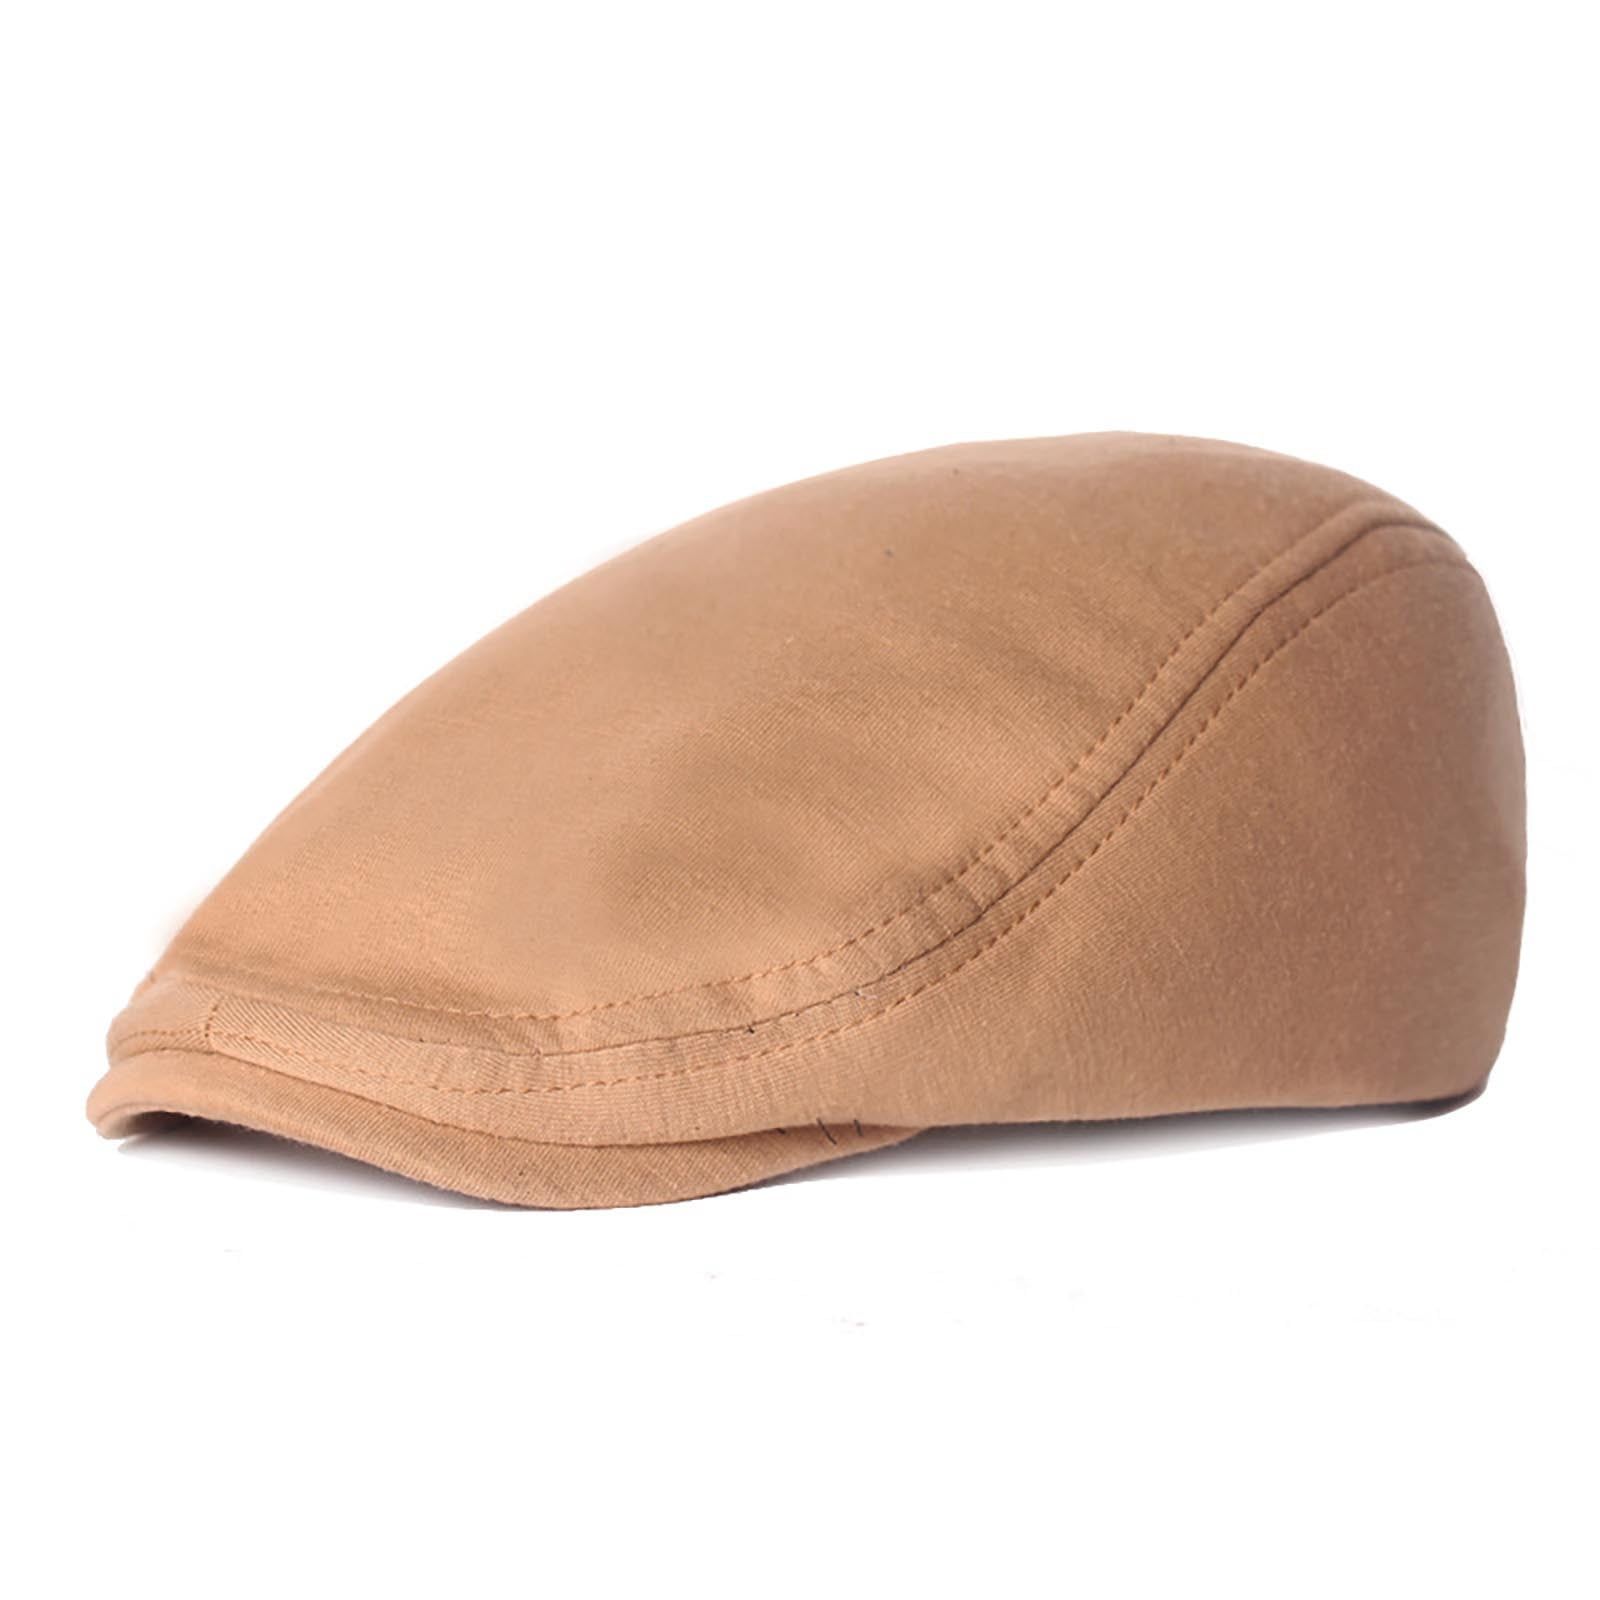 Lroveb Newsboy Hats for Men Women 1 Pieces Men's Hat Cotton Soft ...